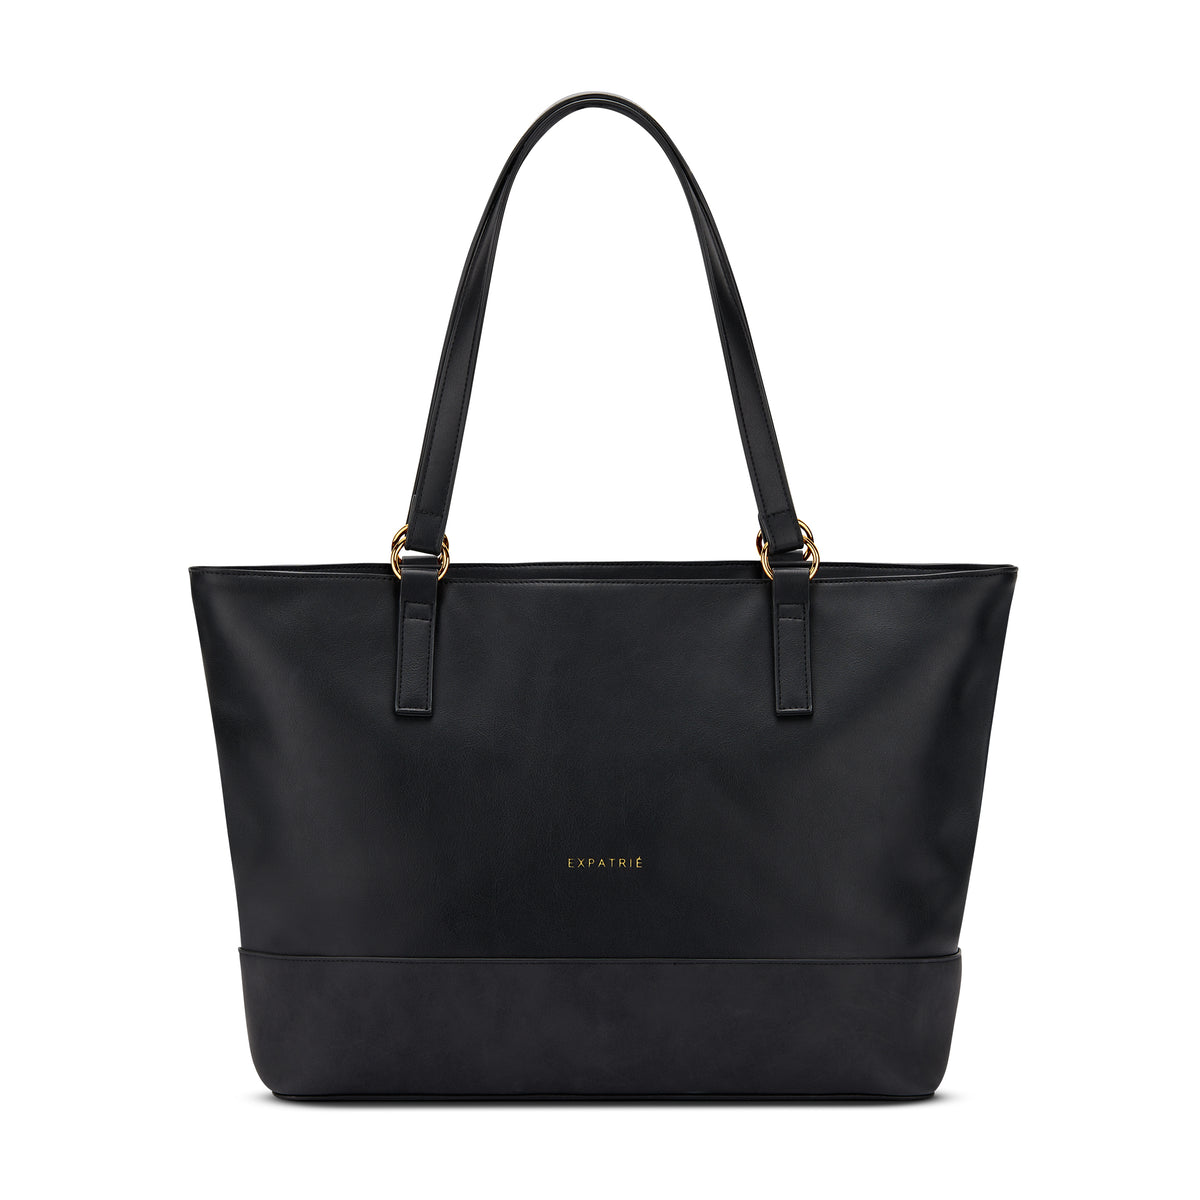 Shopper Bag Nicole